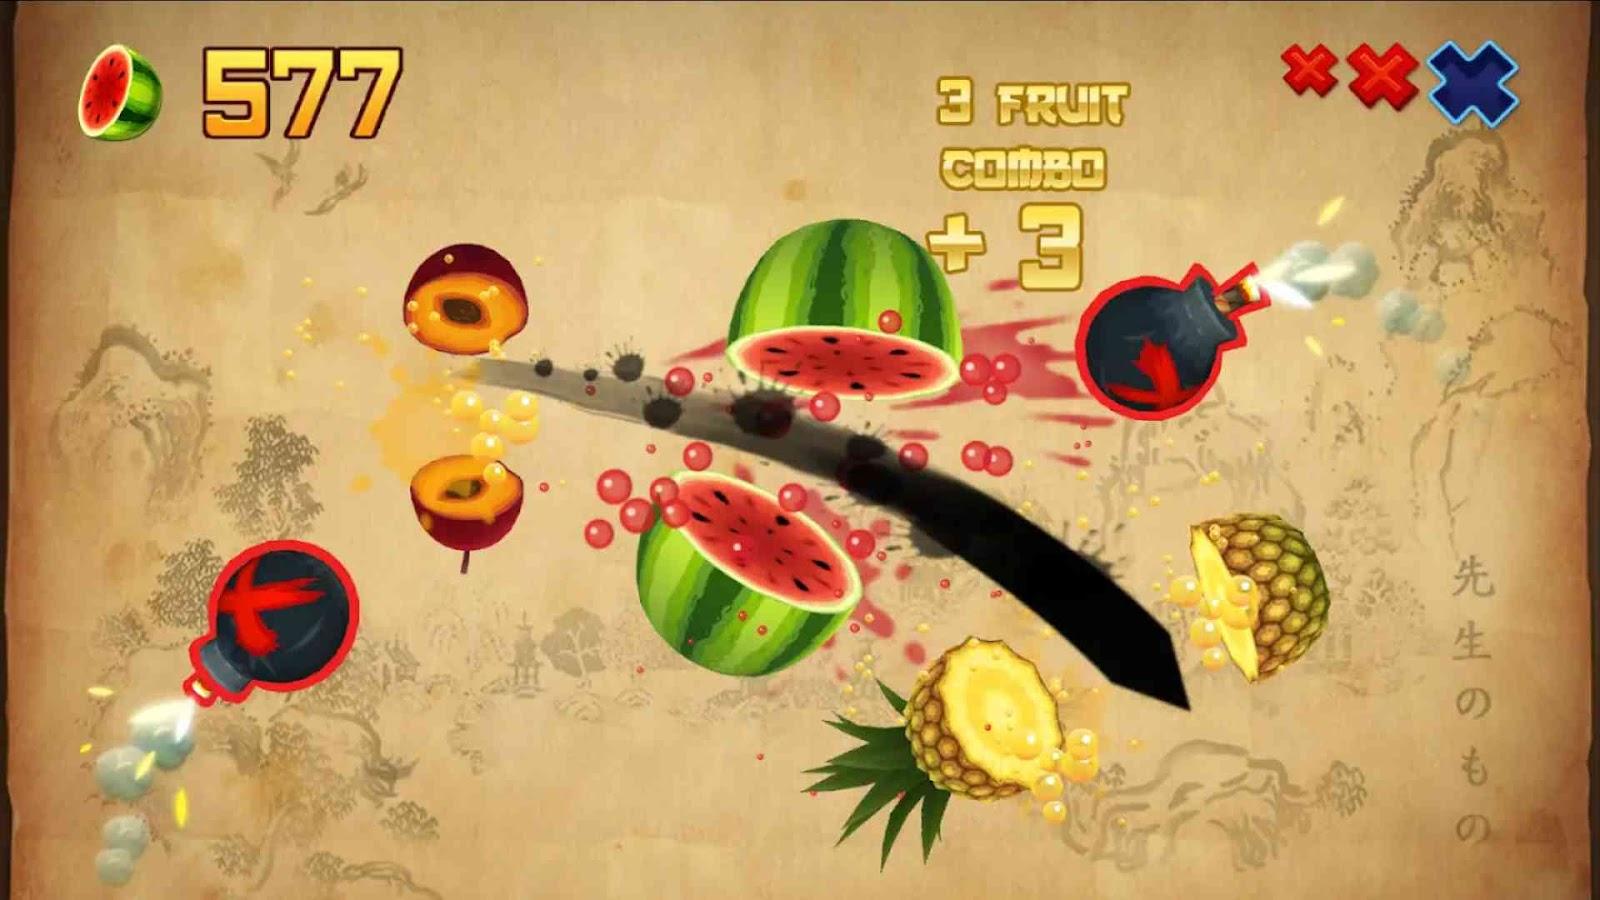 Fruit Slice - Fruit Ninja Classic